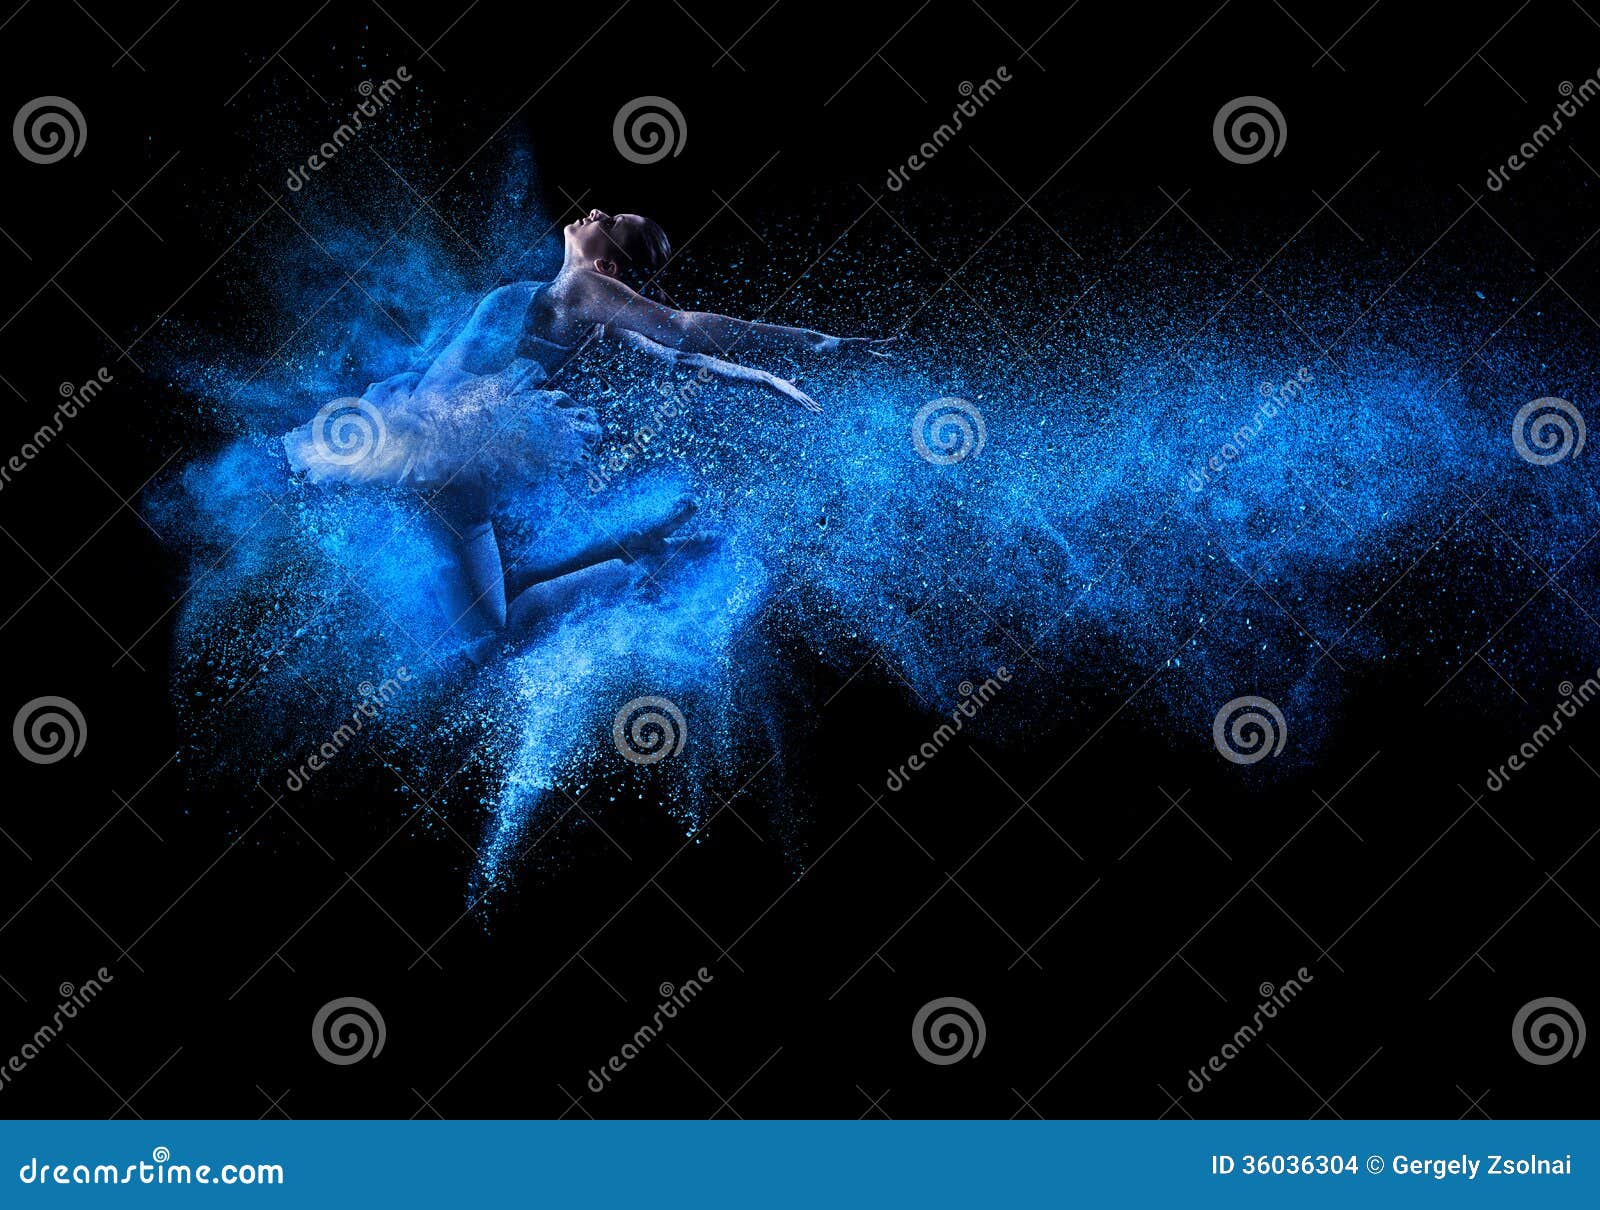 young beautiful dancer jumping into blue powder cloud